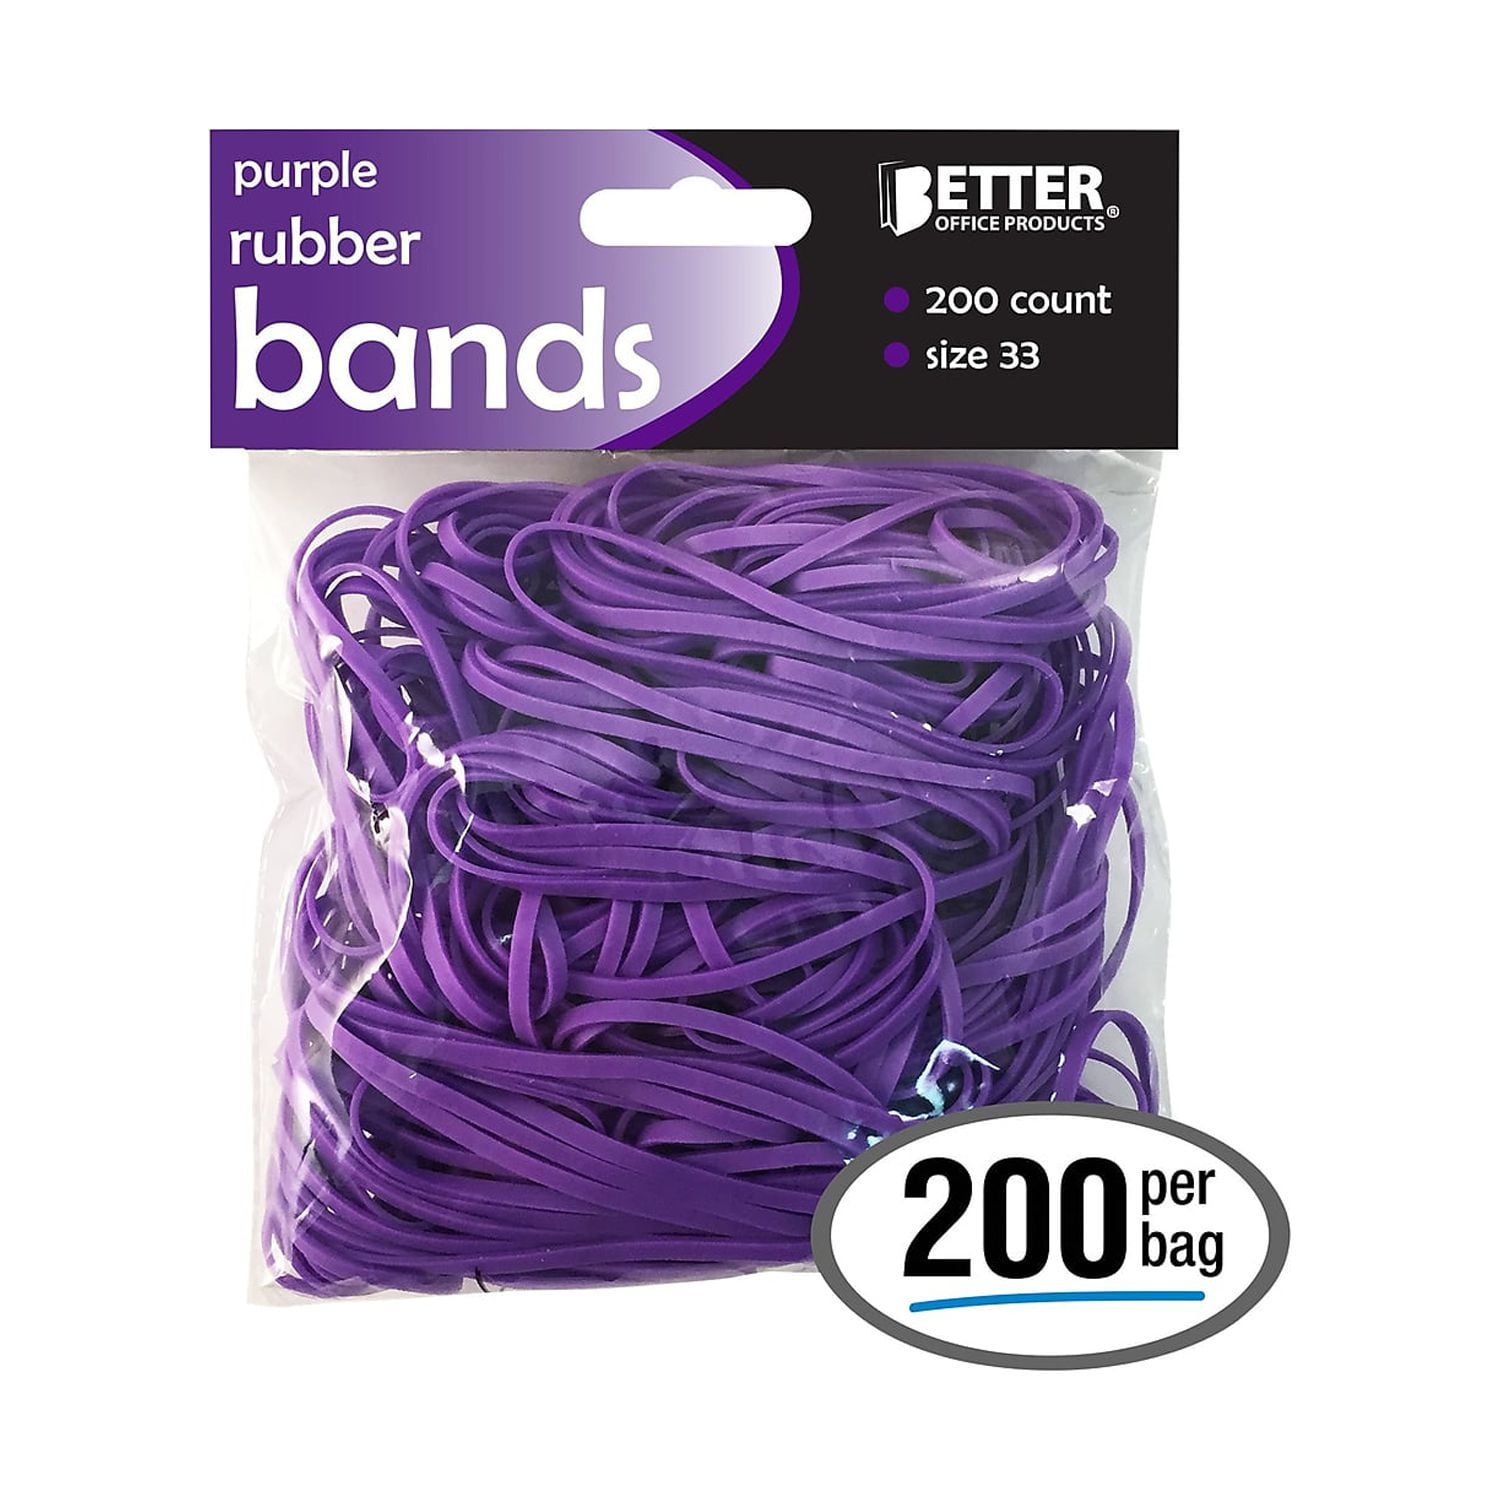 PlasticMill Rubber Bands - #33 Size - White Rubberbands - 100 Count